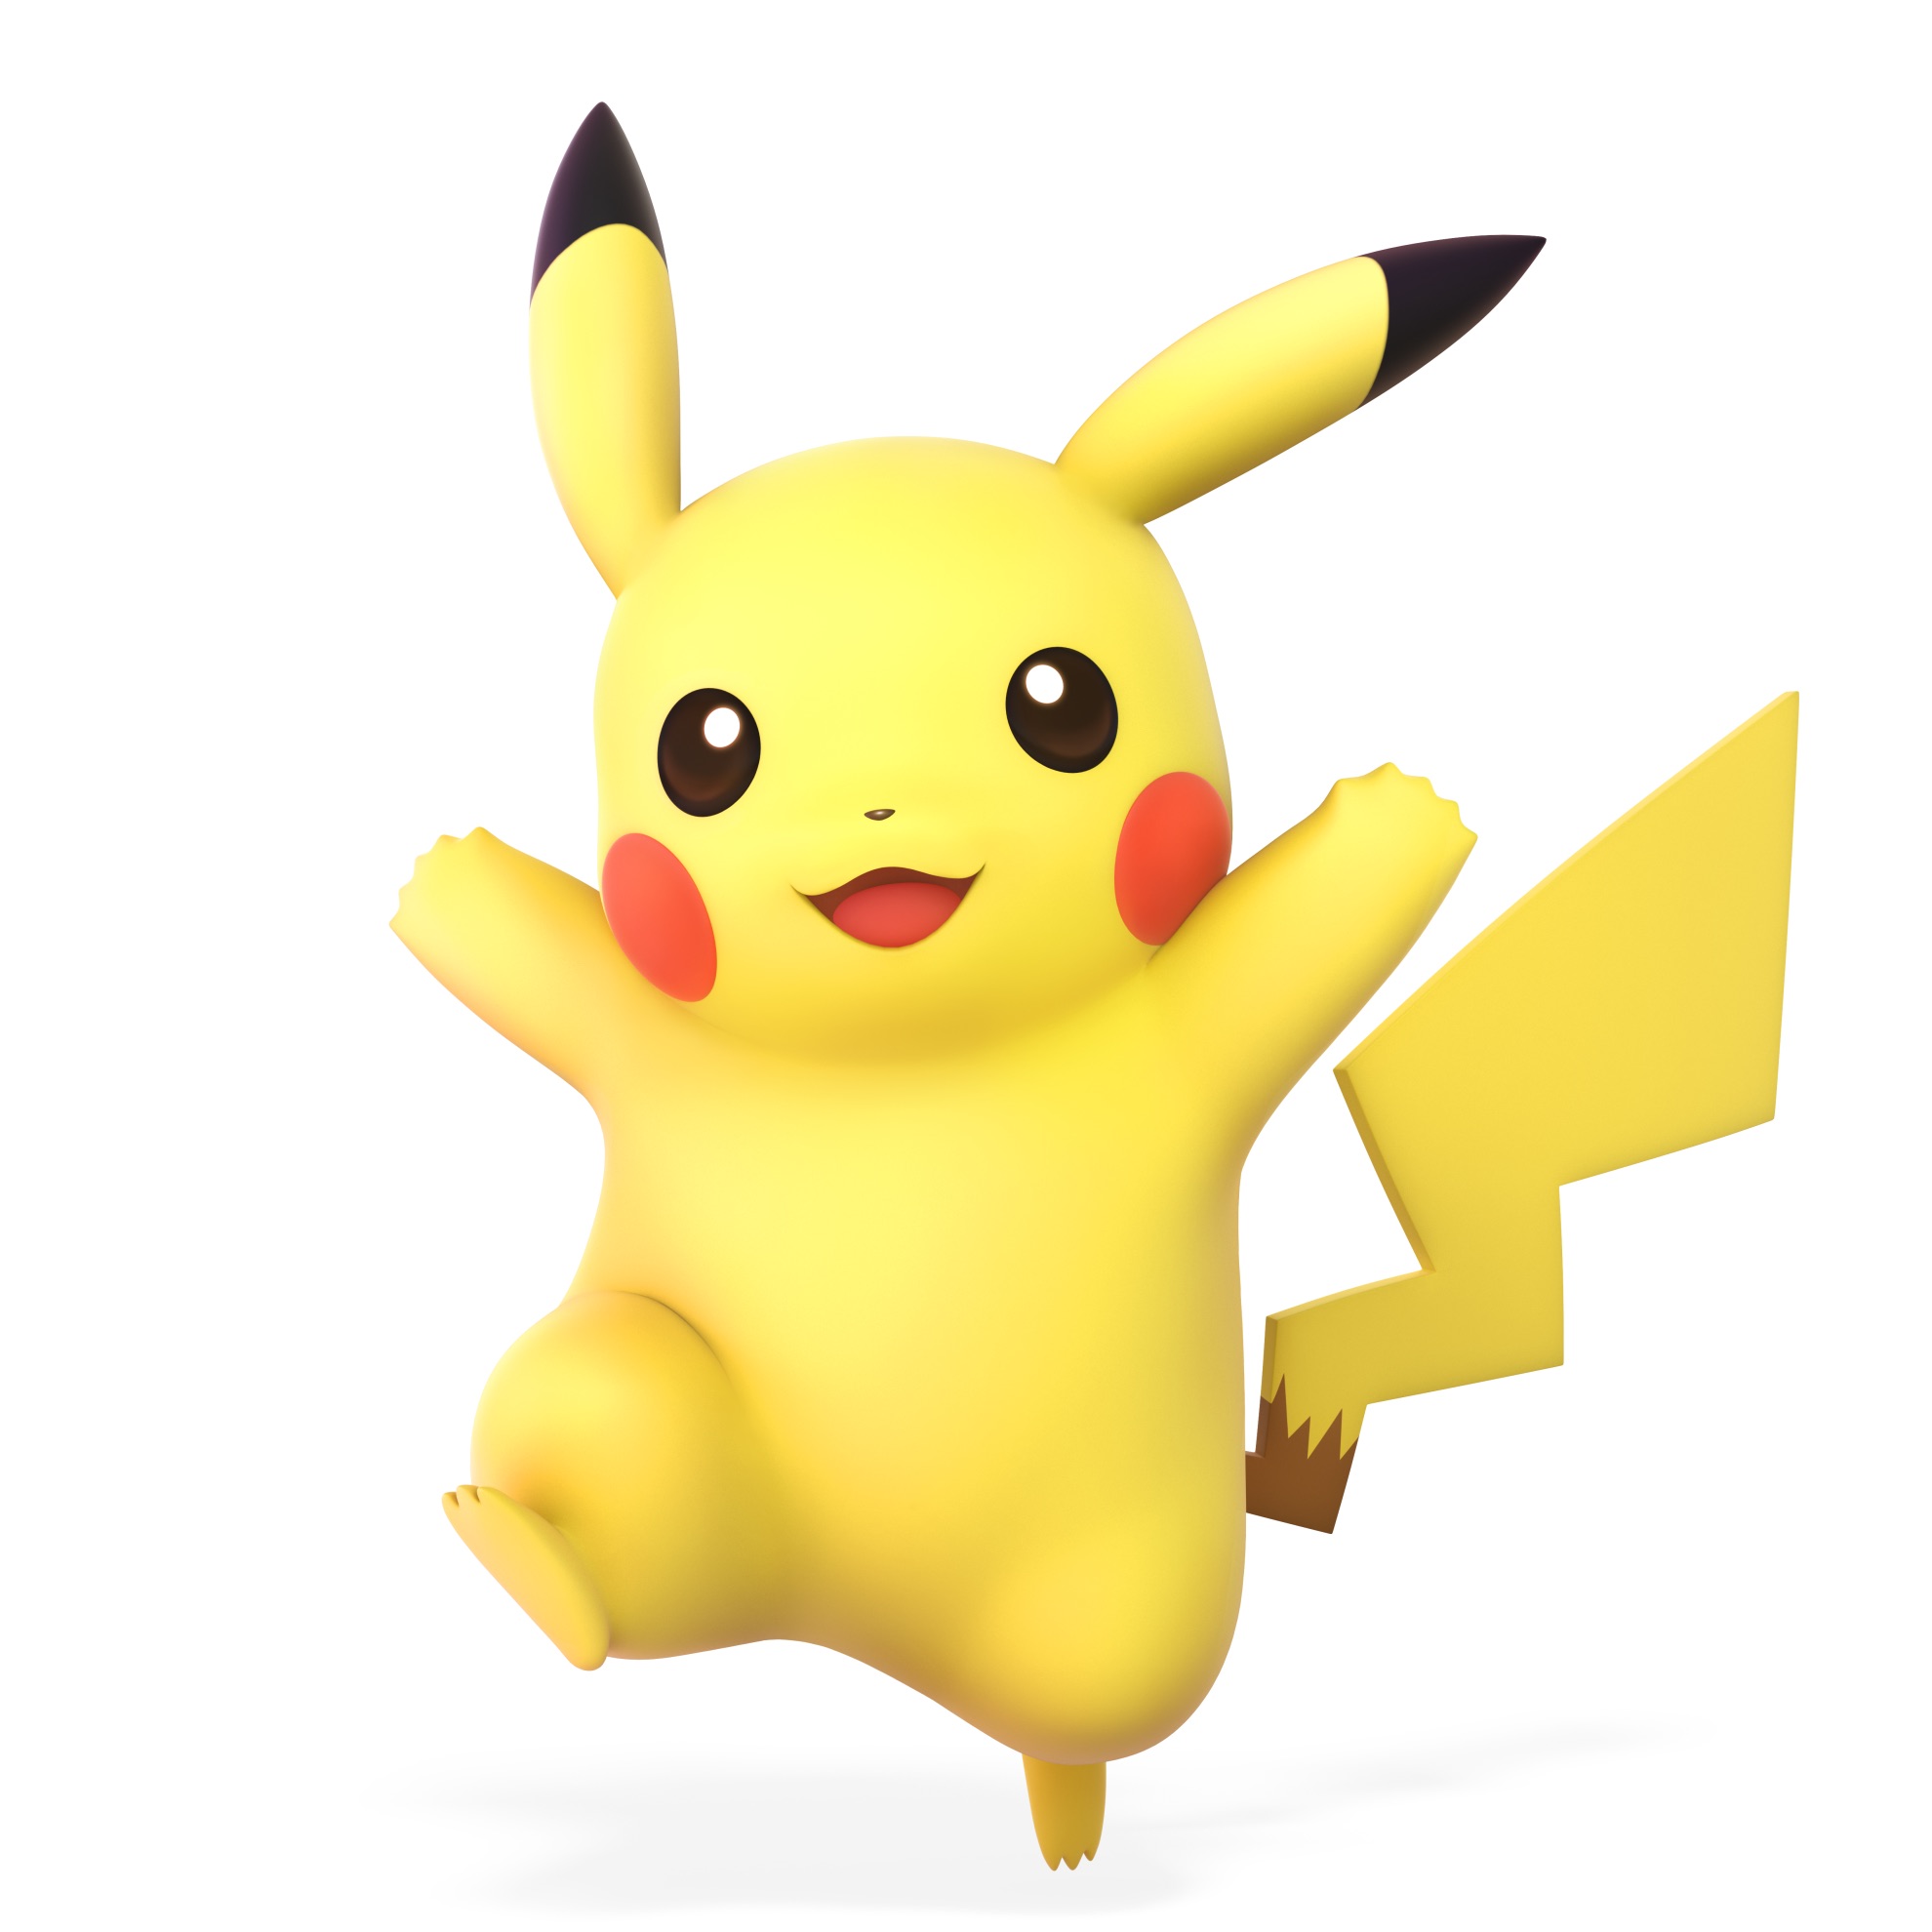 Pikachu Super Smash Bros. Ultimate Character Render